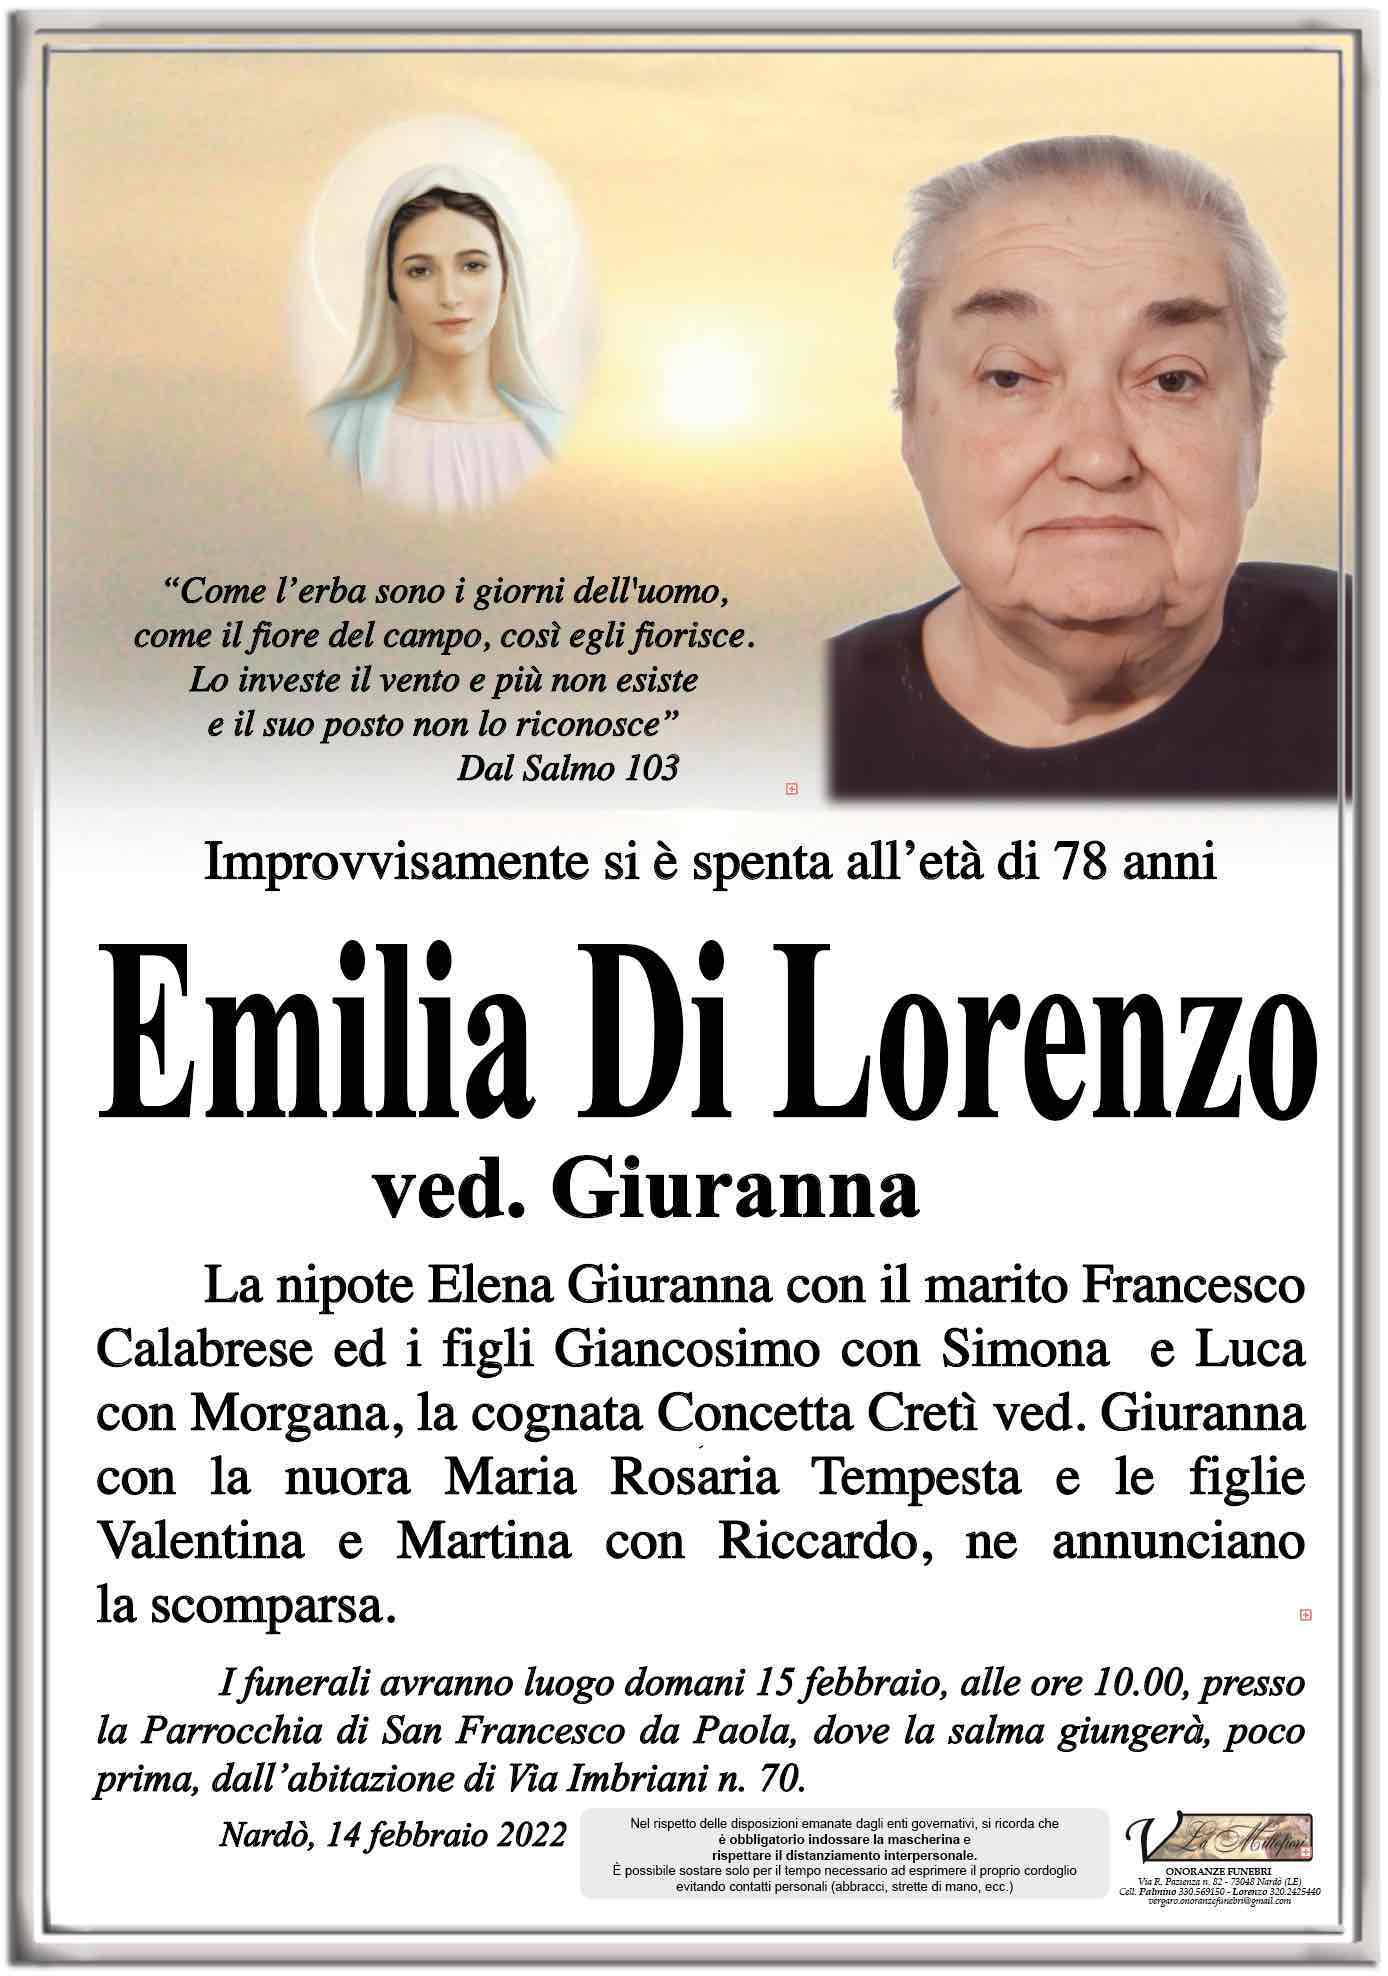 Emilia Di Lorenzo